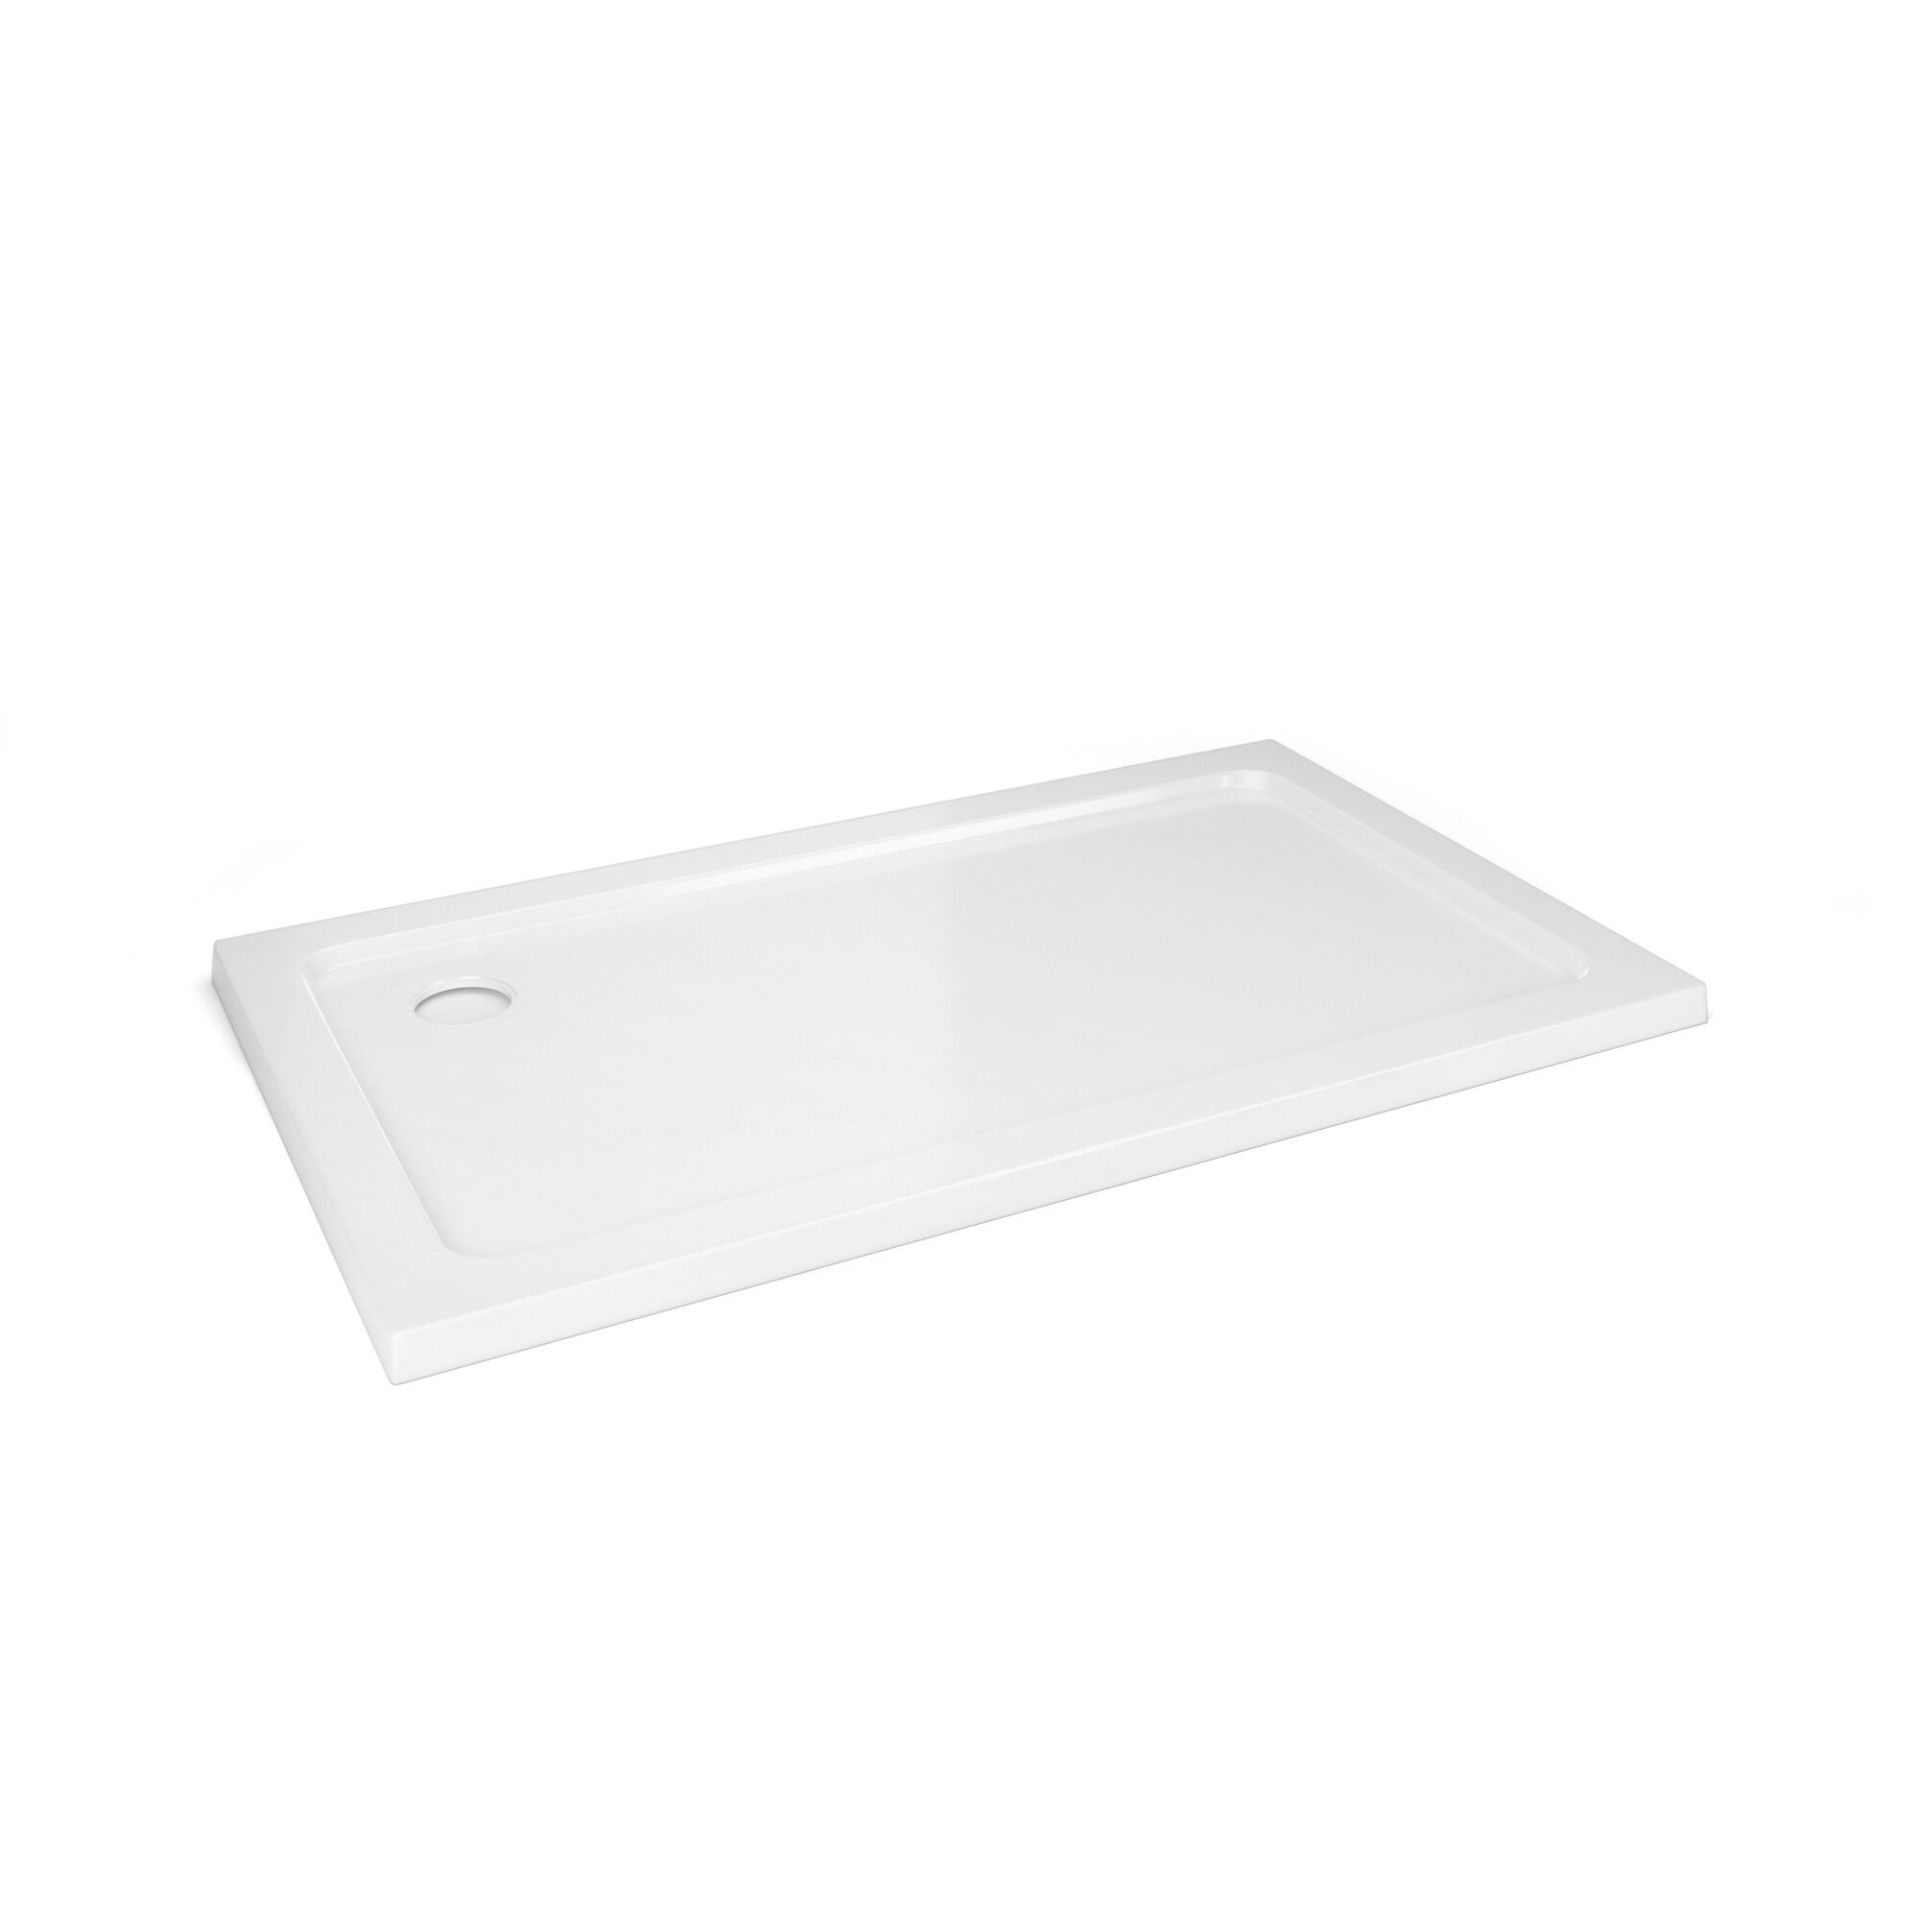 (EY36) 1200x700mm Rectangular Ultra Slim Stone Shower Tray. Low profile ultra slim design Gel coated - Image 2 of 2